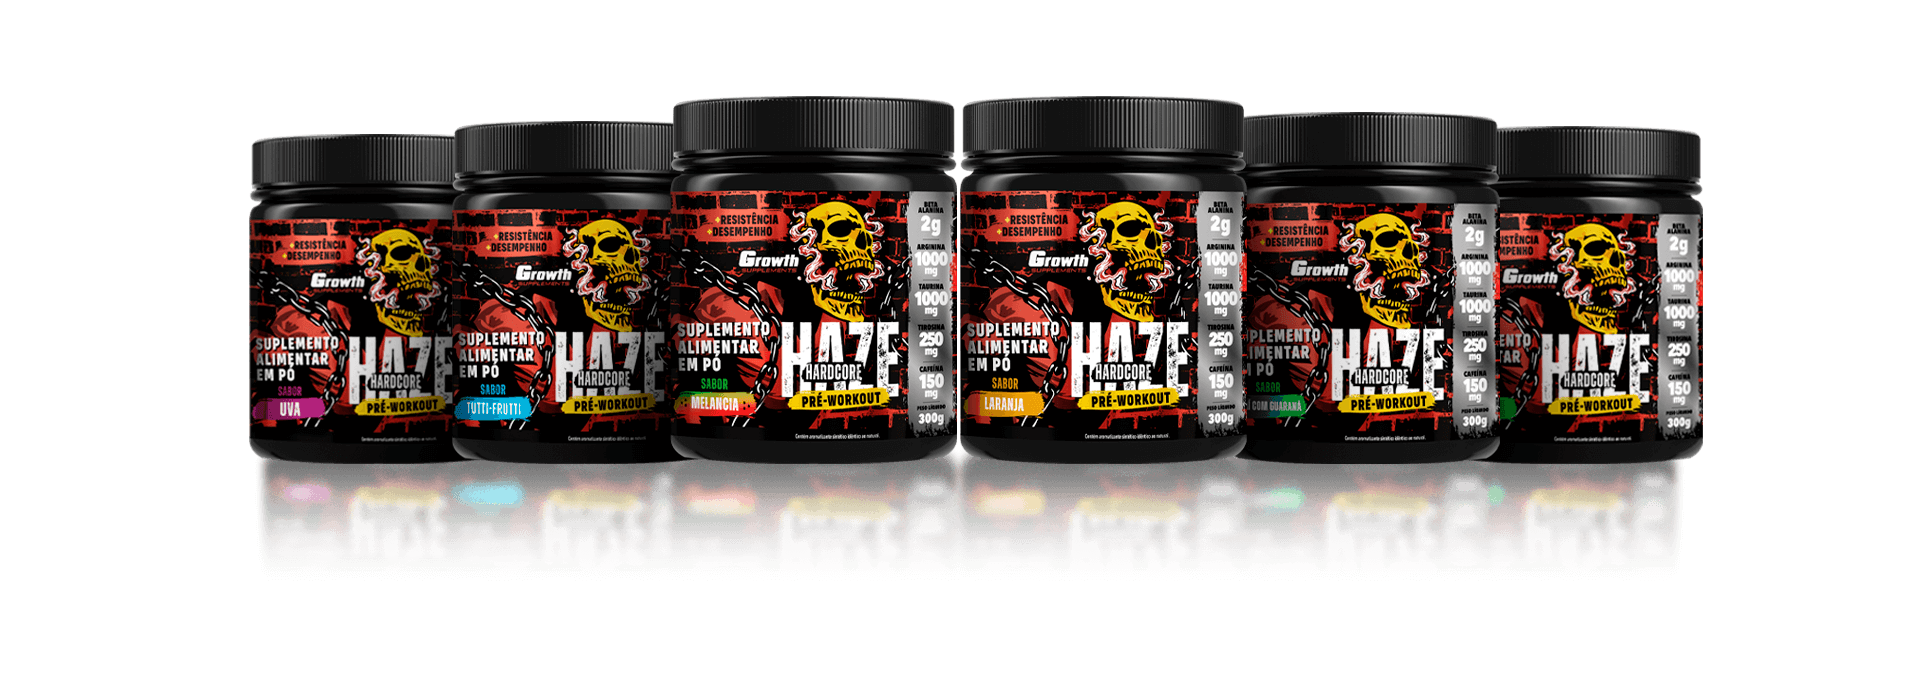 Haze Hardcore Pre-Workout Growth Supplements